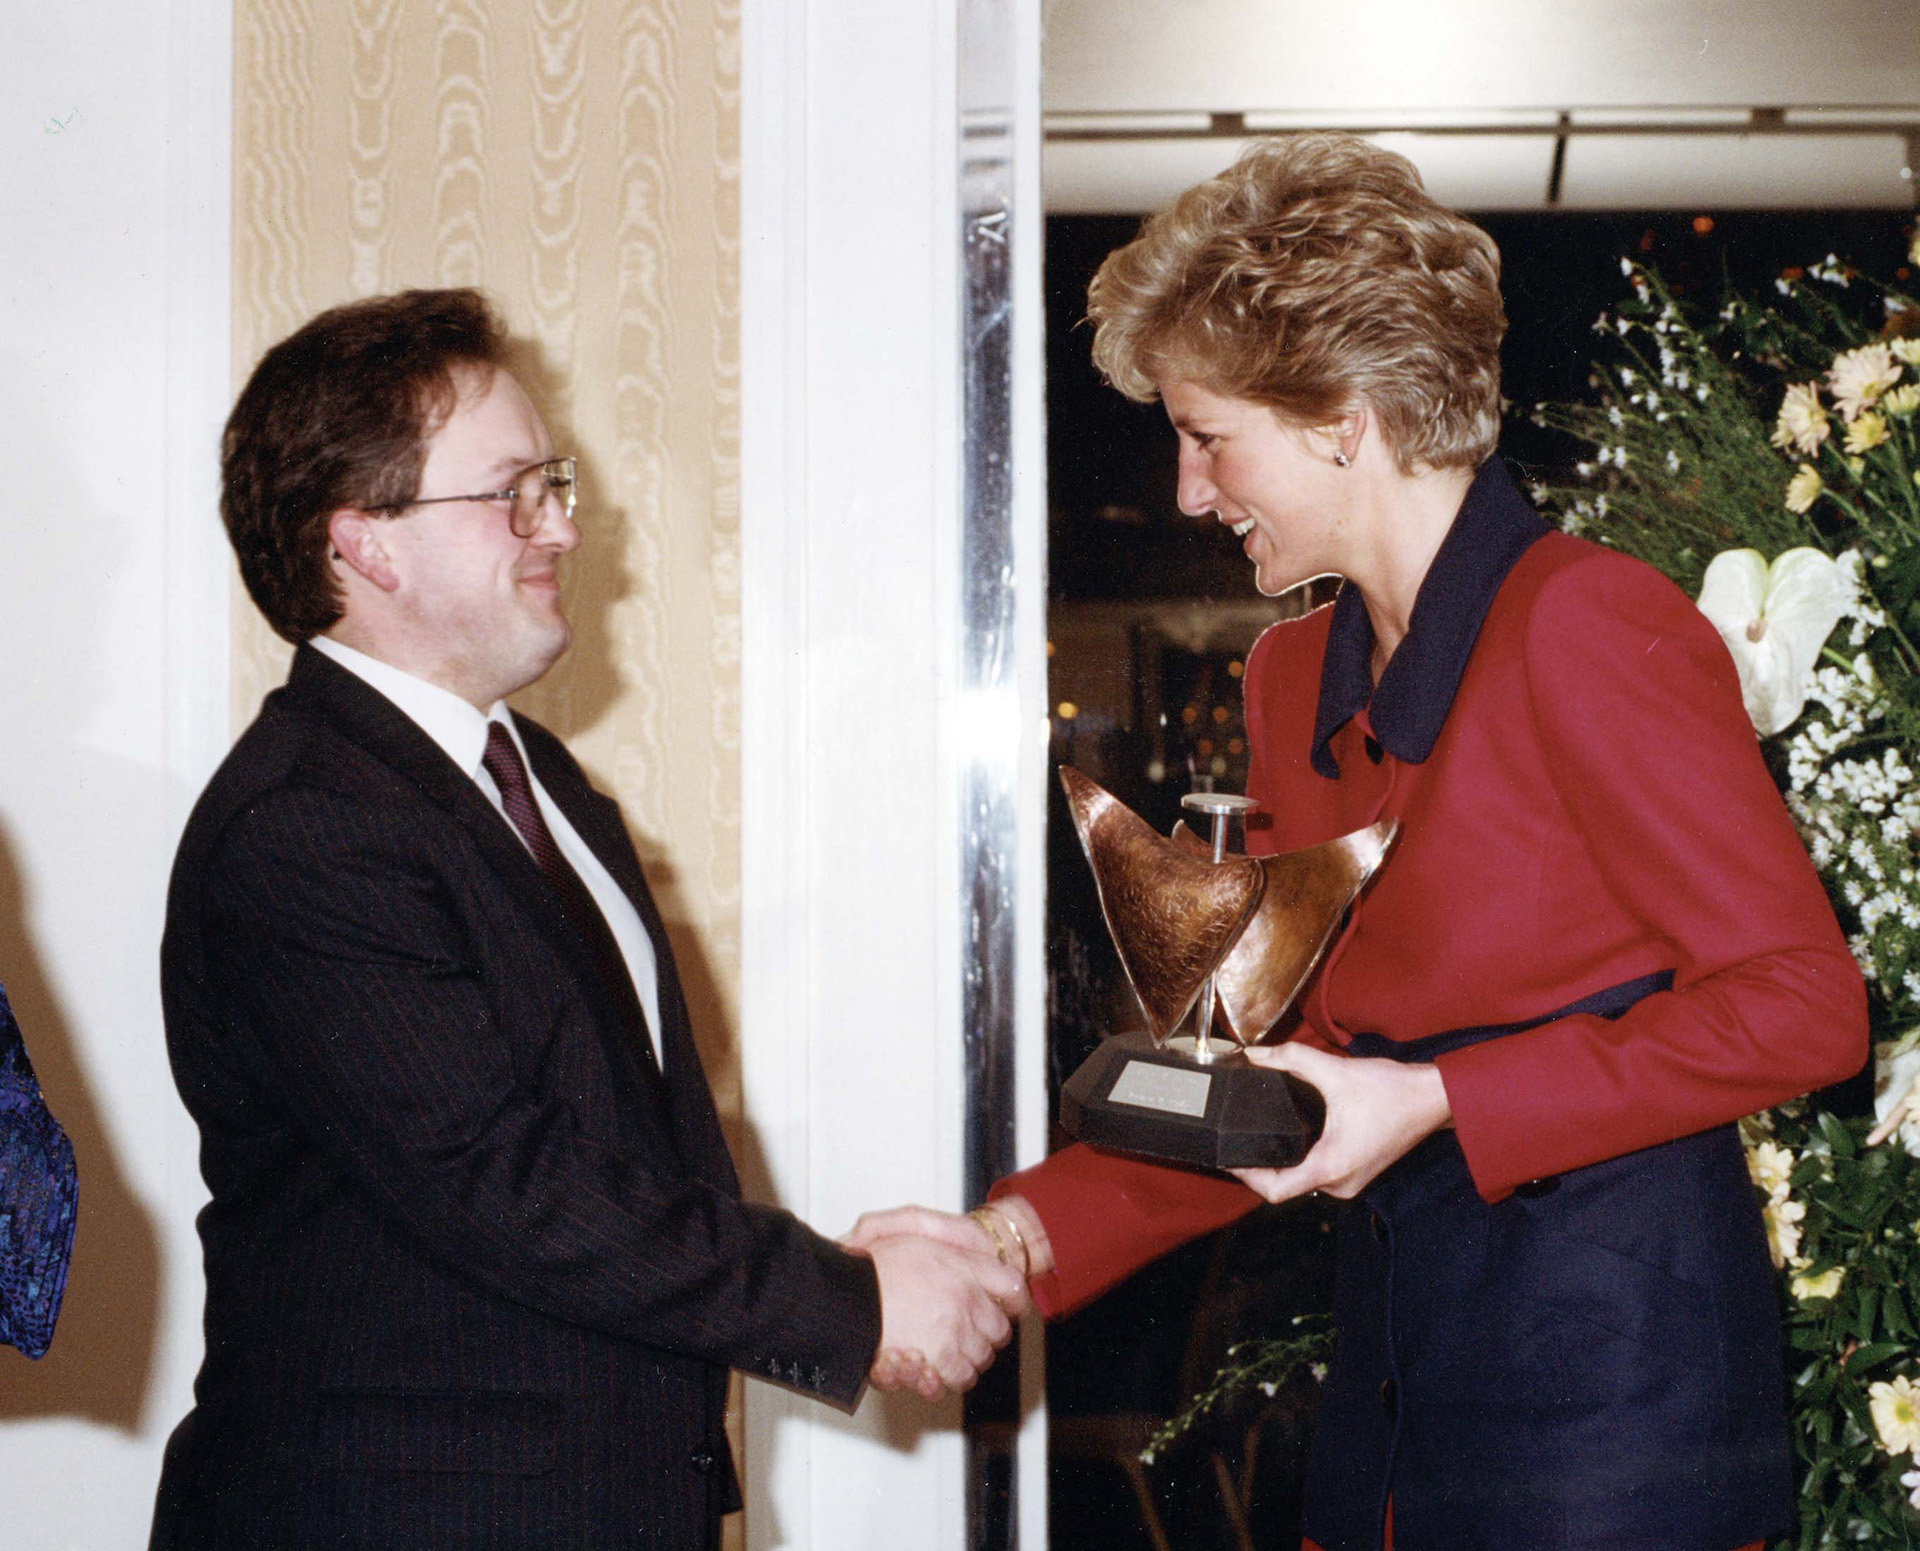 Fraser Pithie receiving award from Princess Diana